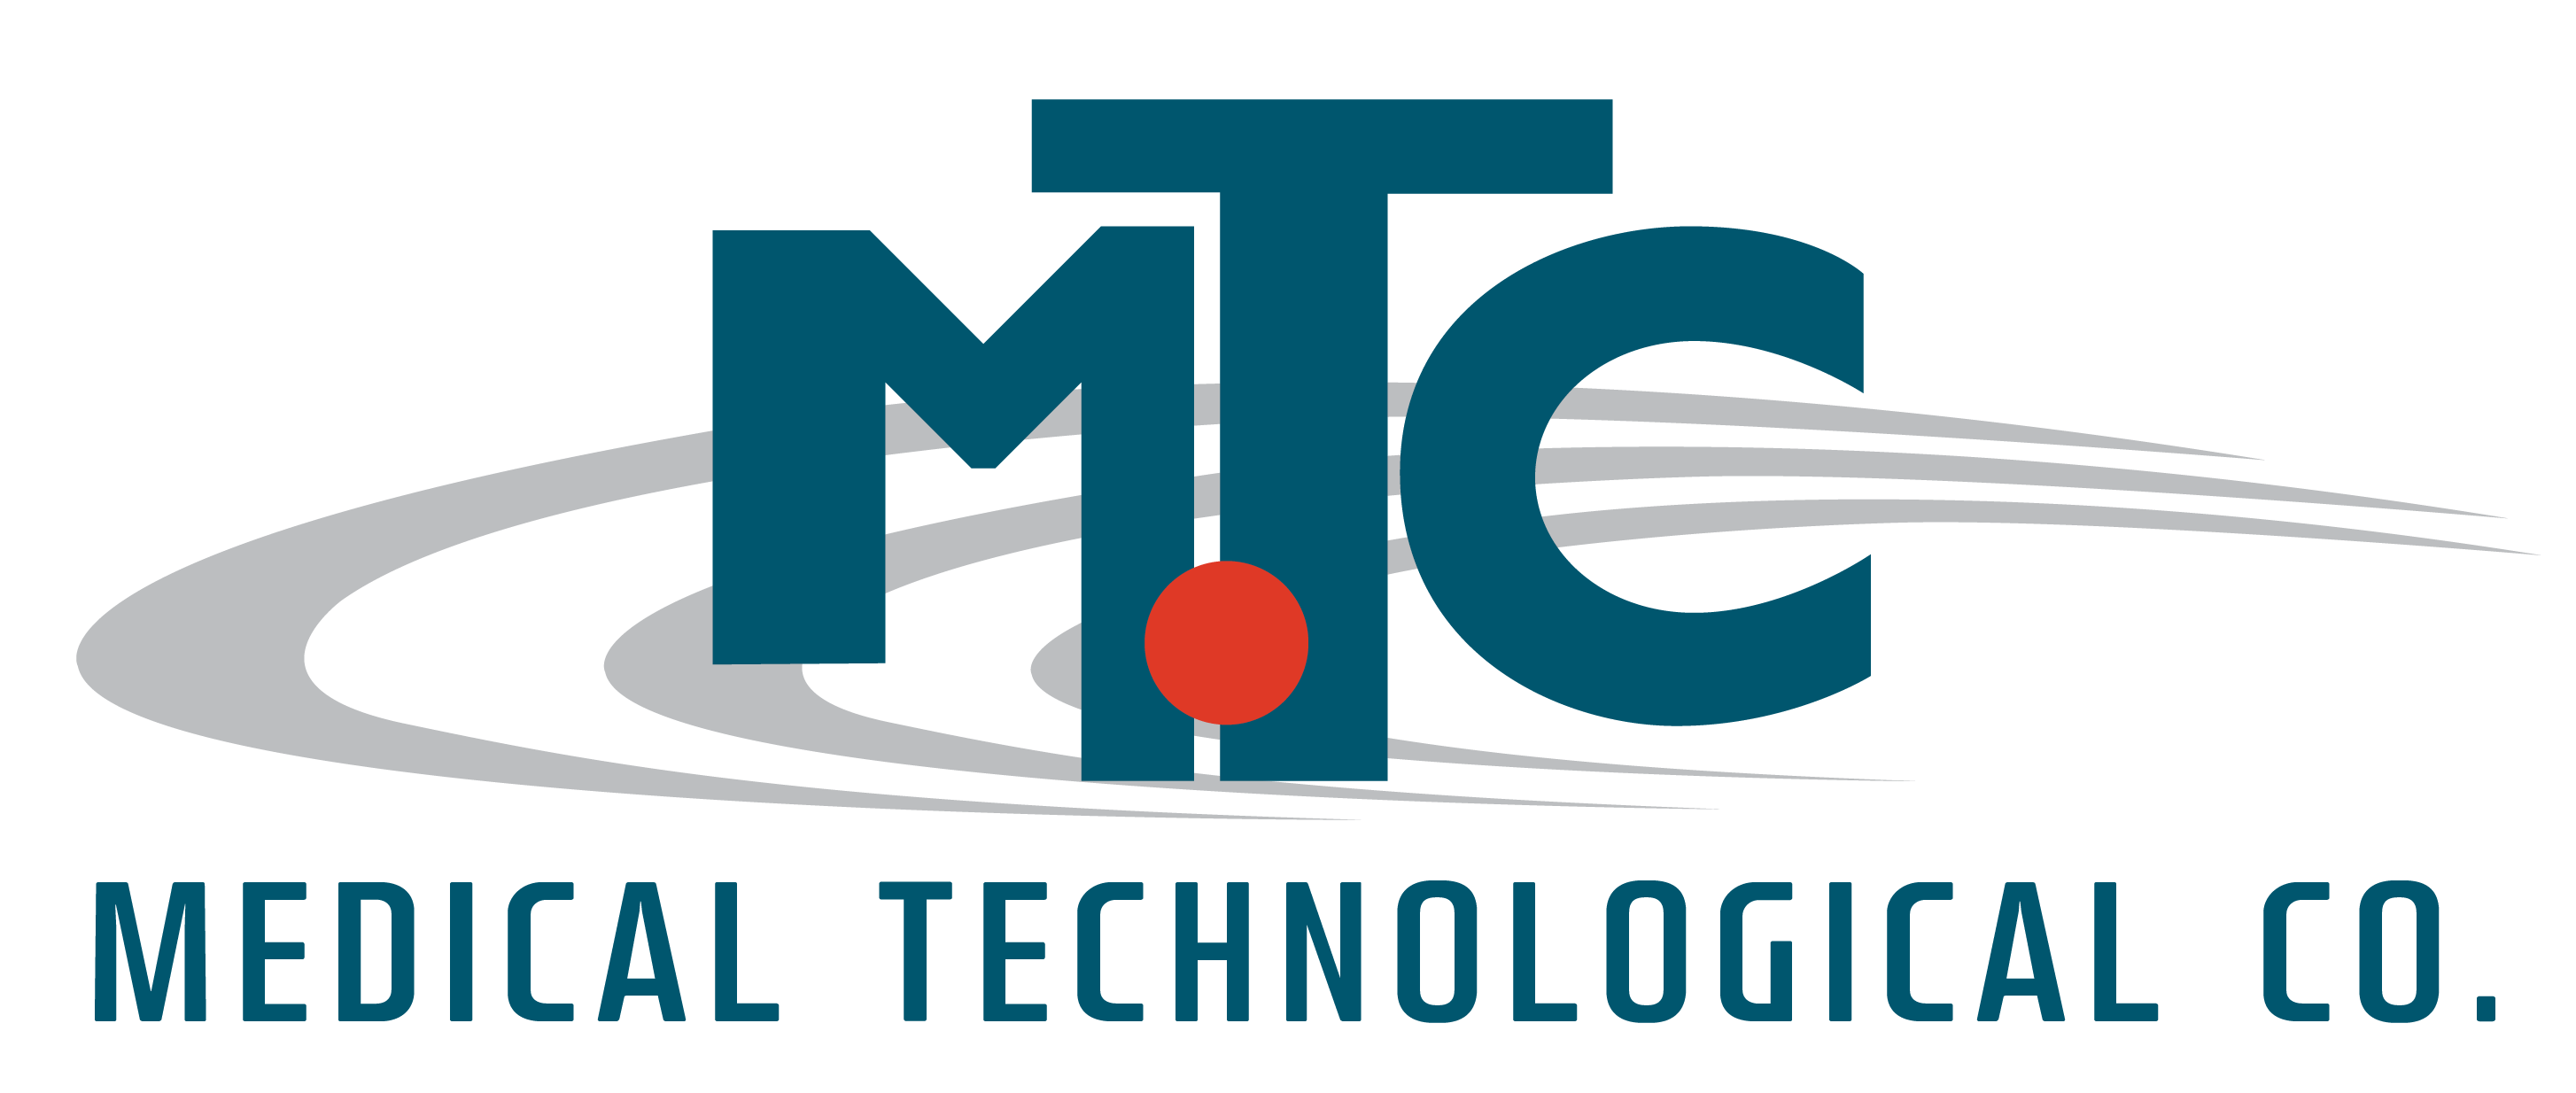 mtc new logo